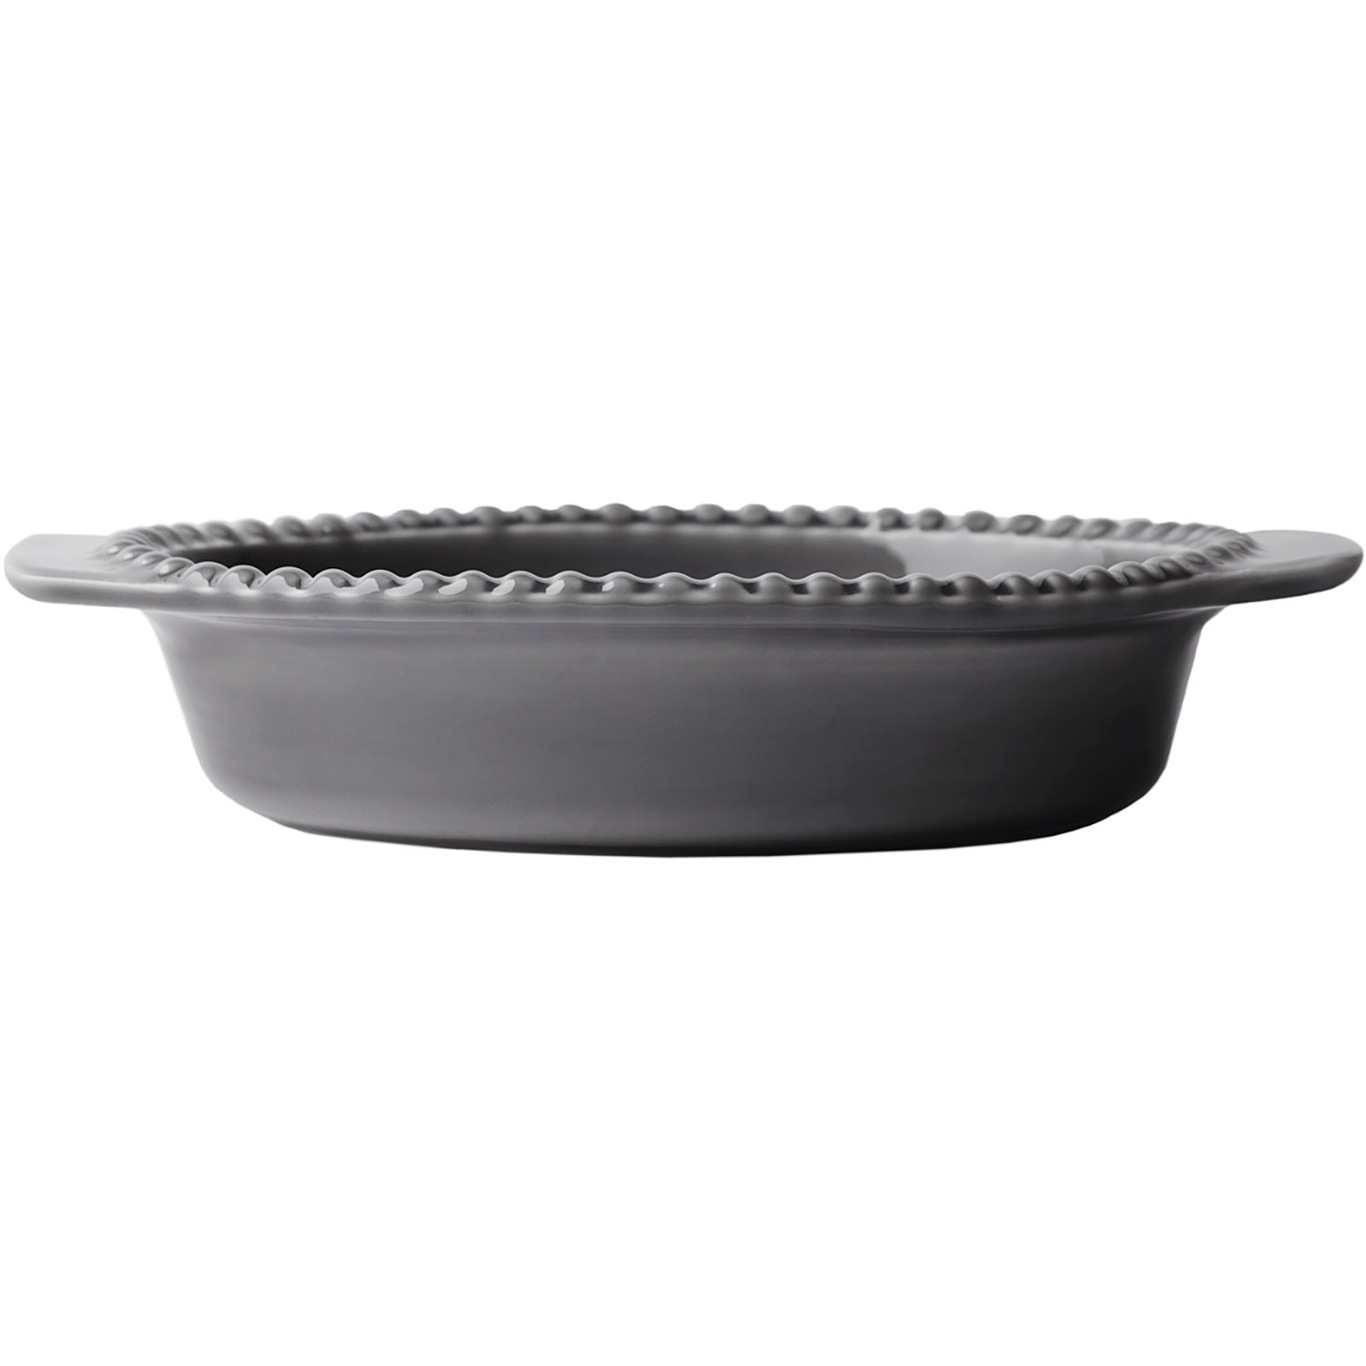 DARIA Oven Dish 26 cm, Clean Grey